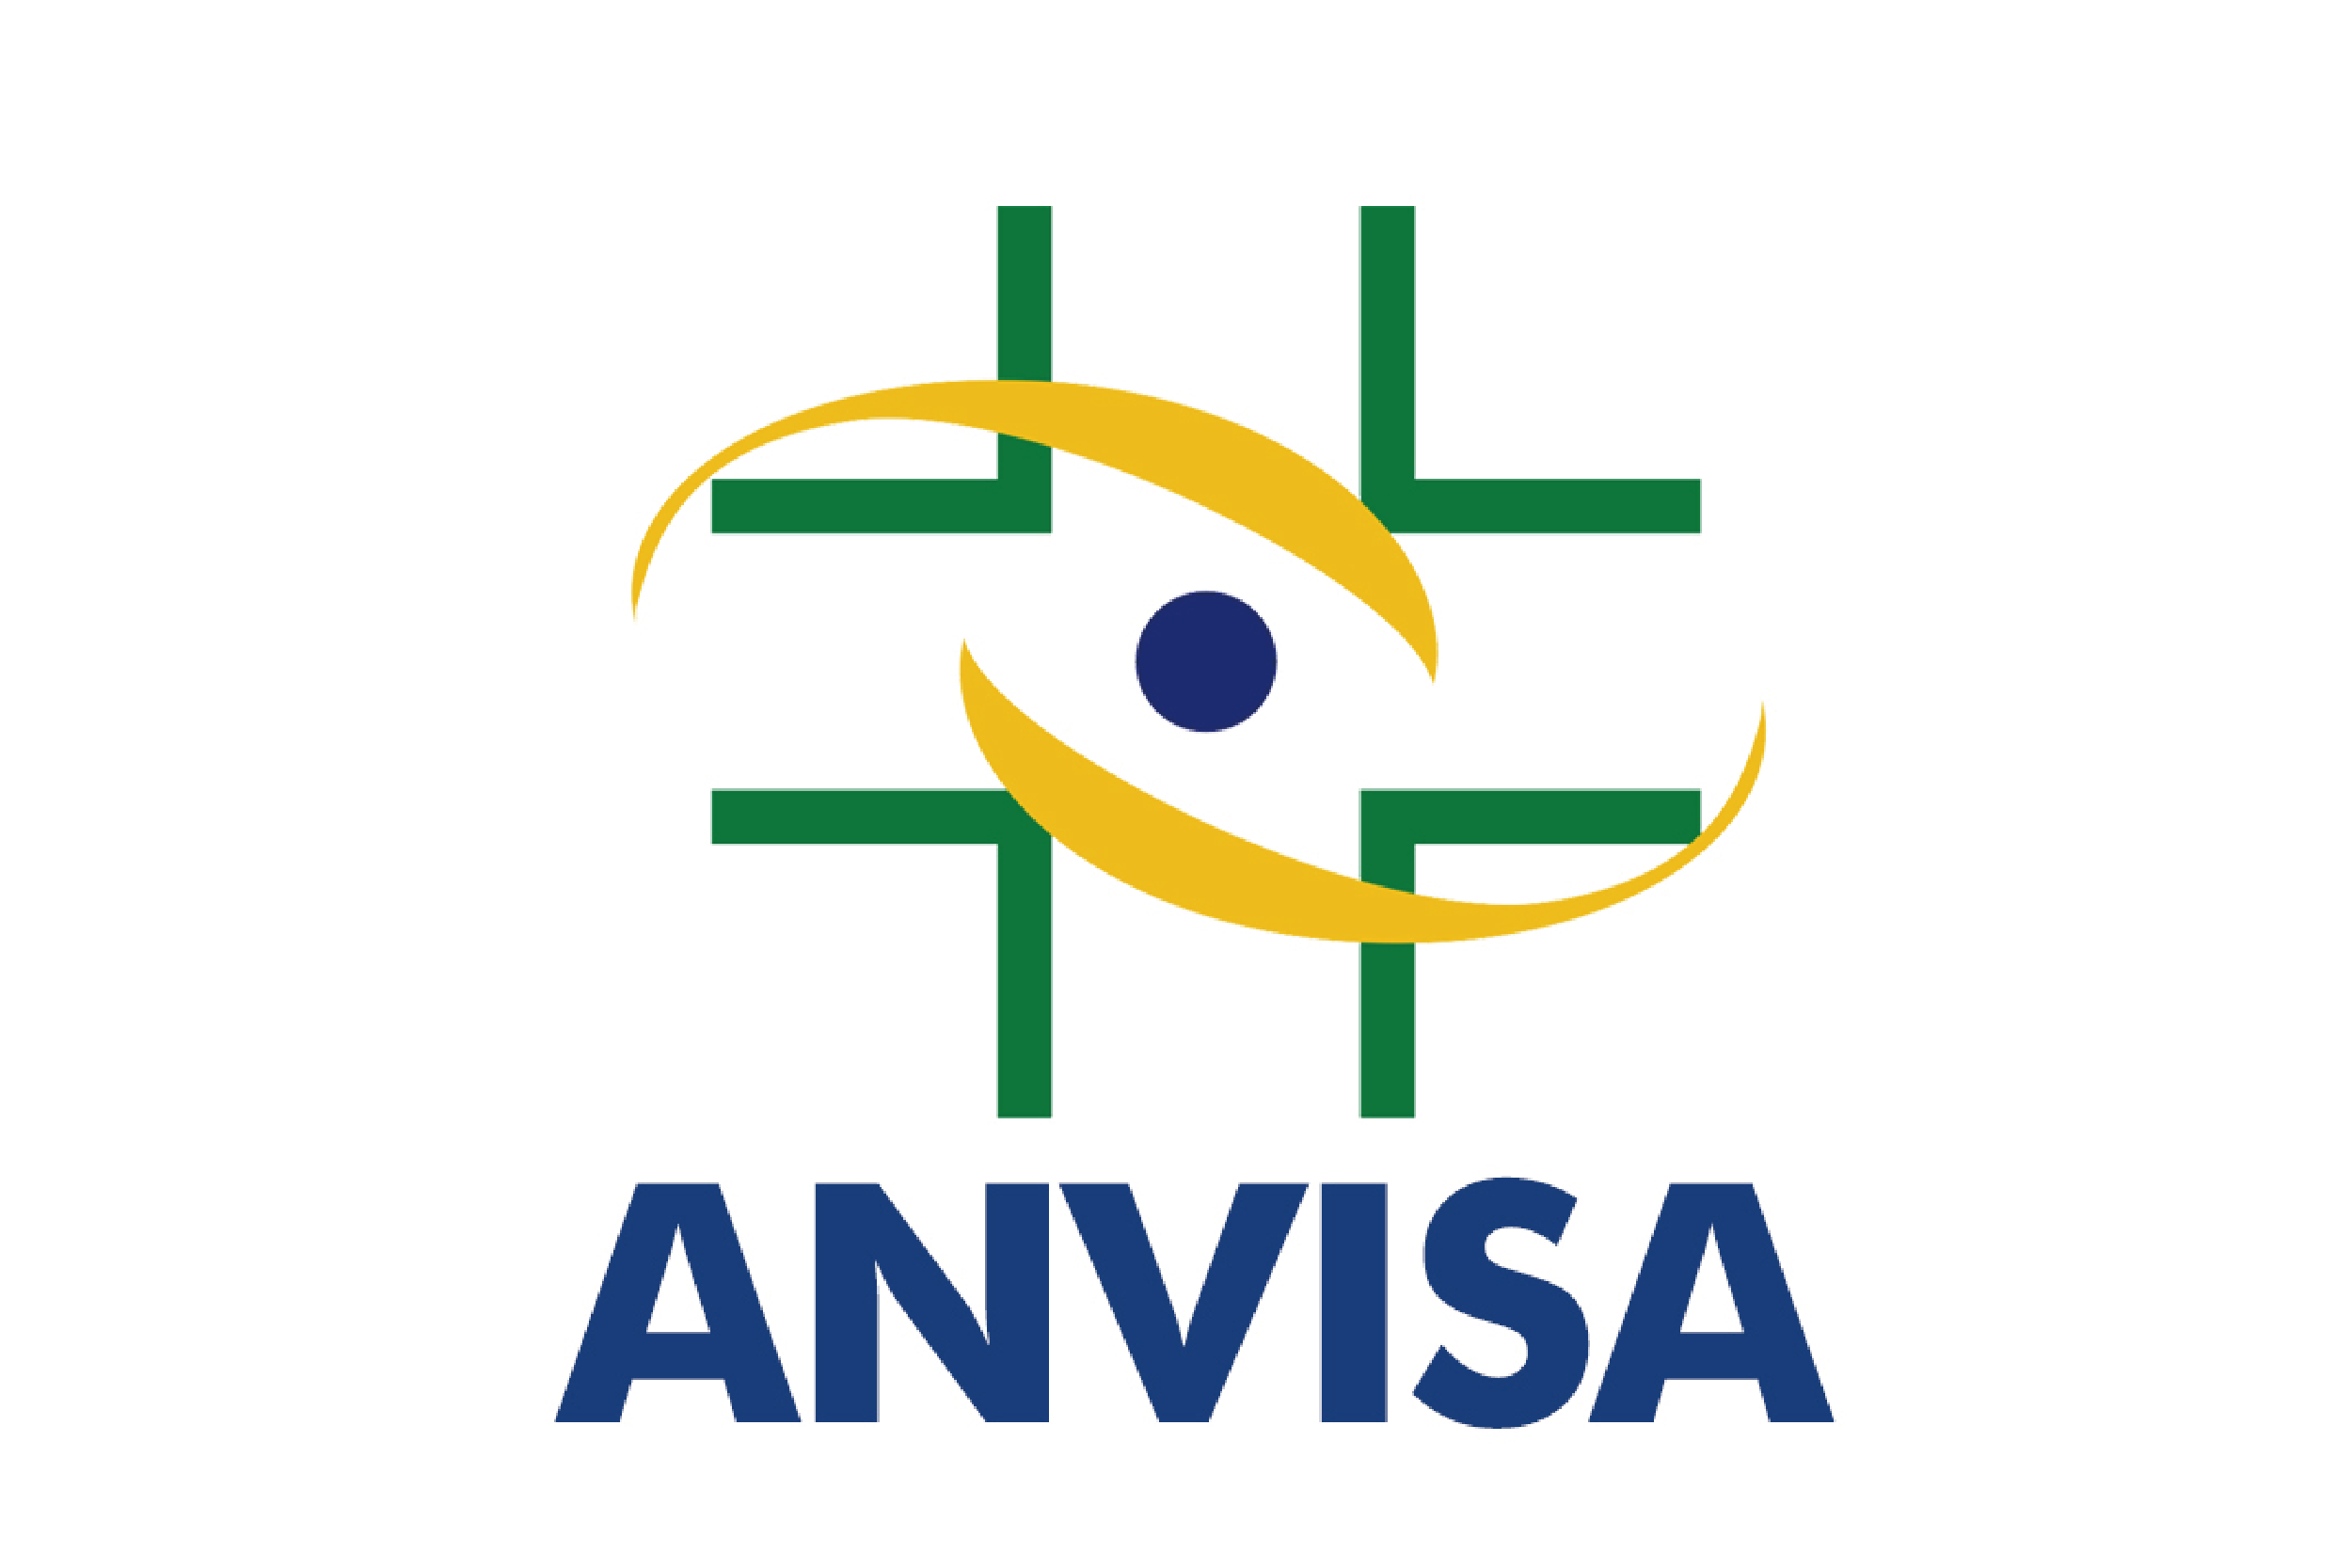 Covid-19 Ag Test Got Brazil ANVISA Approval